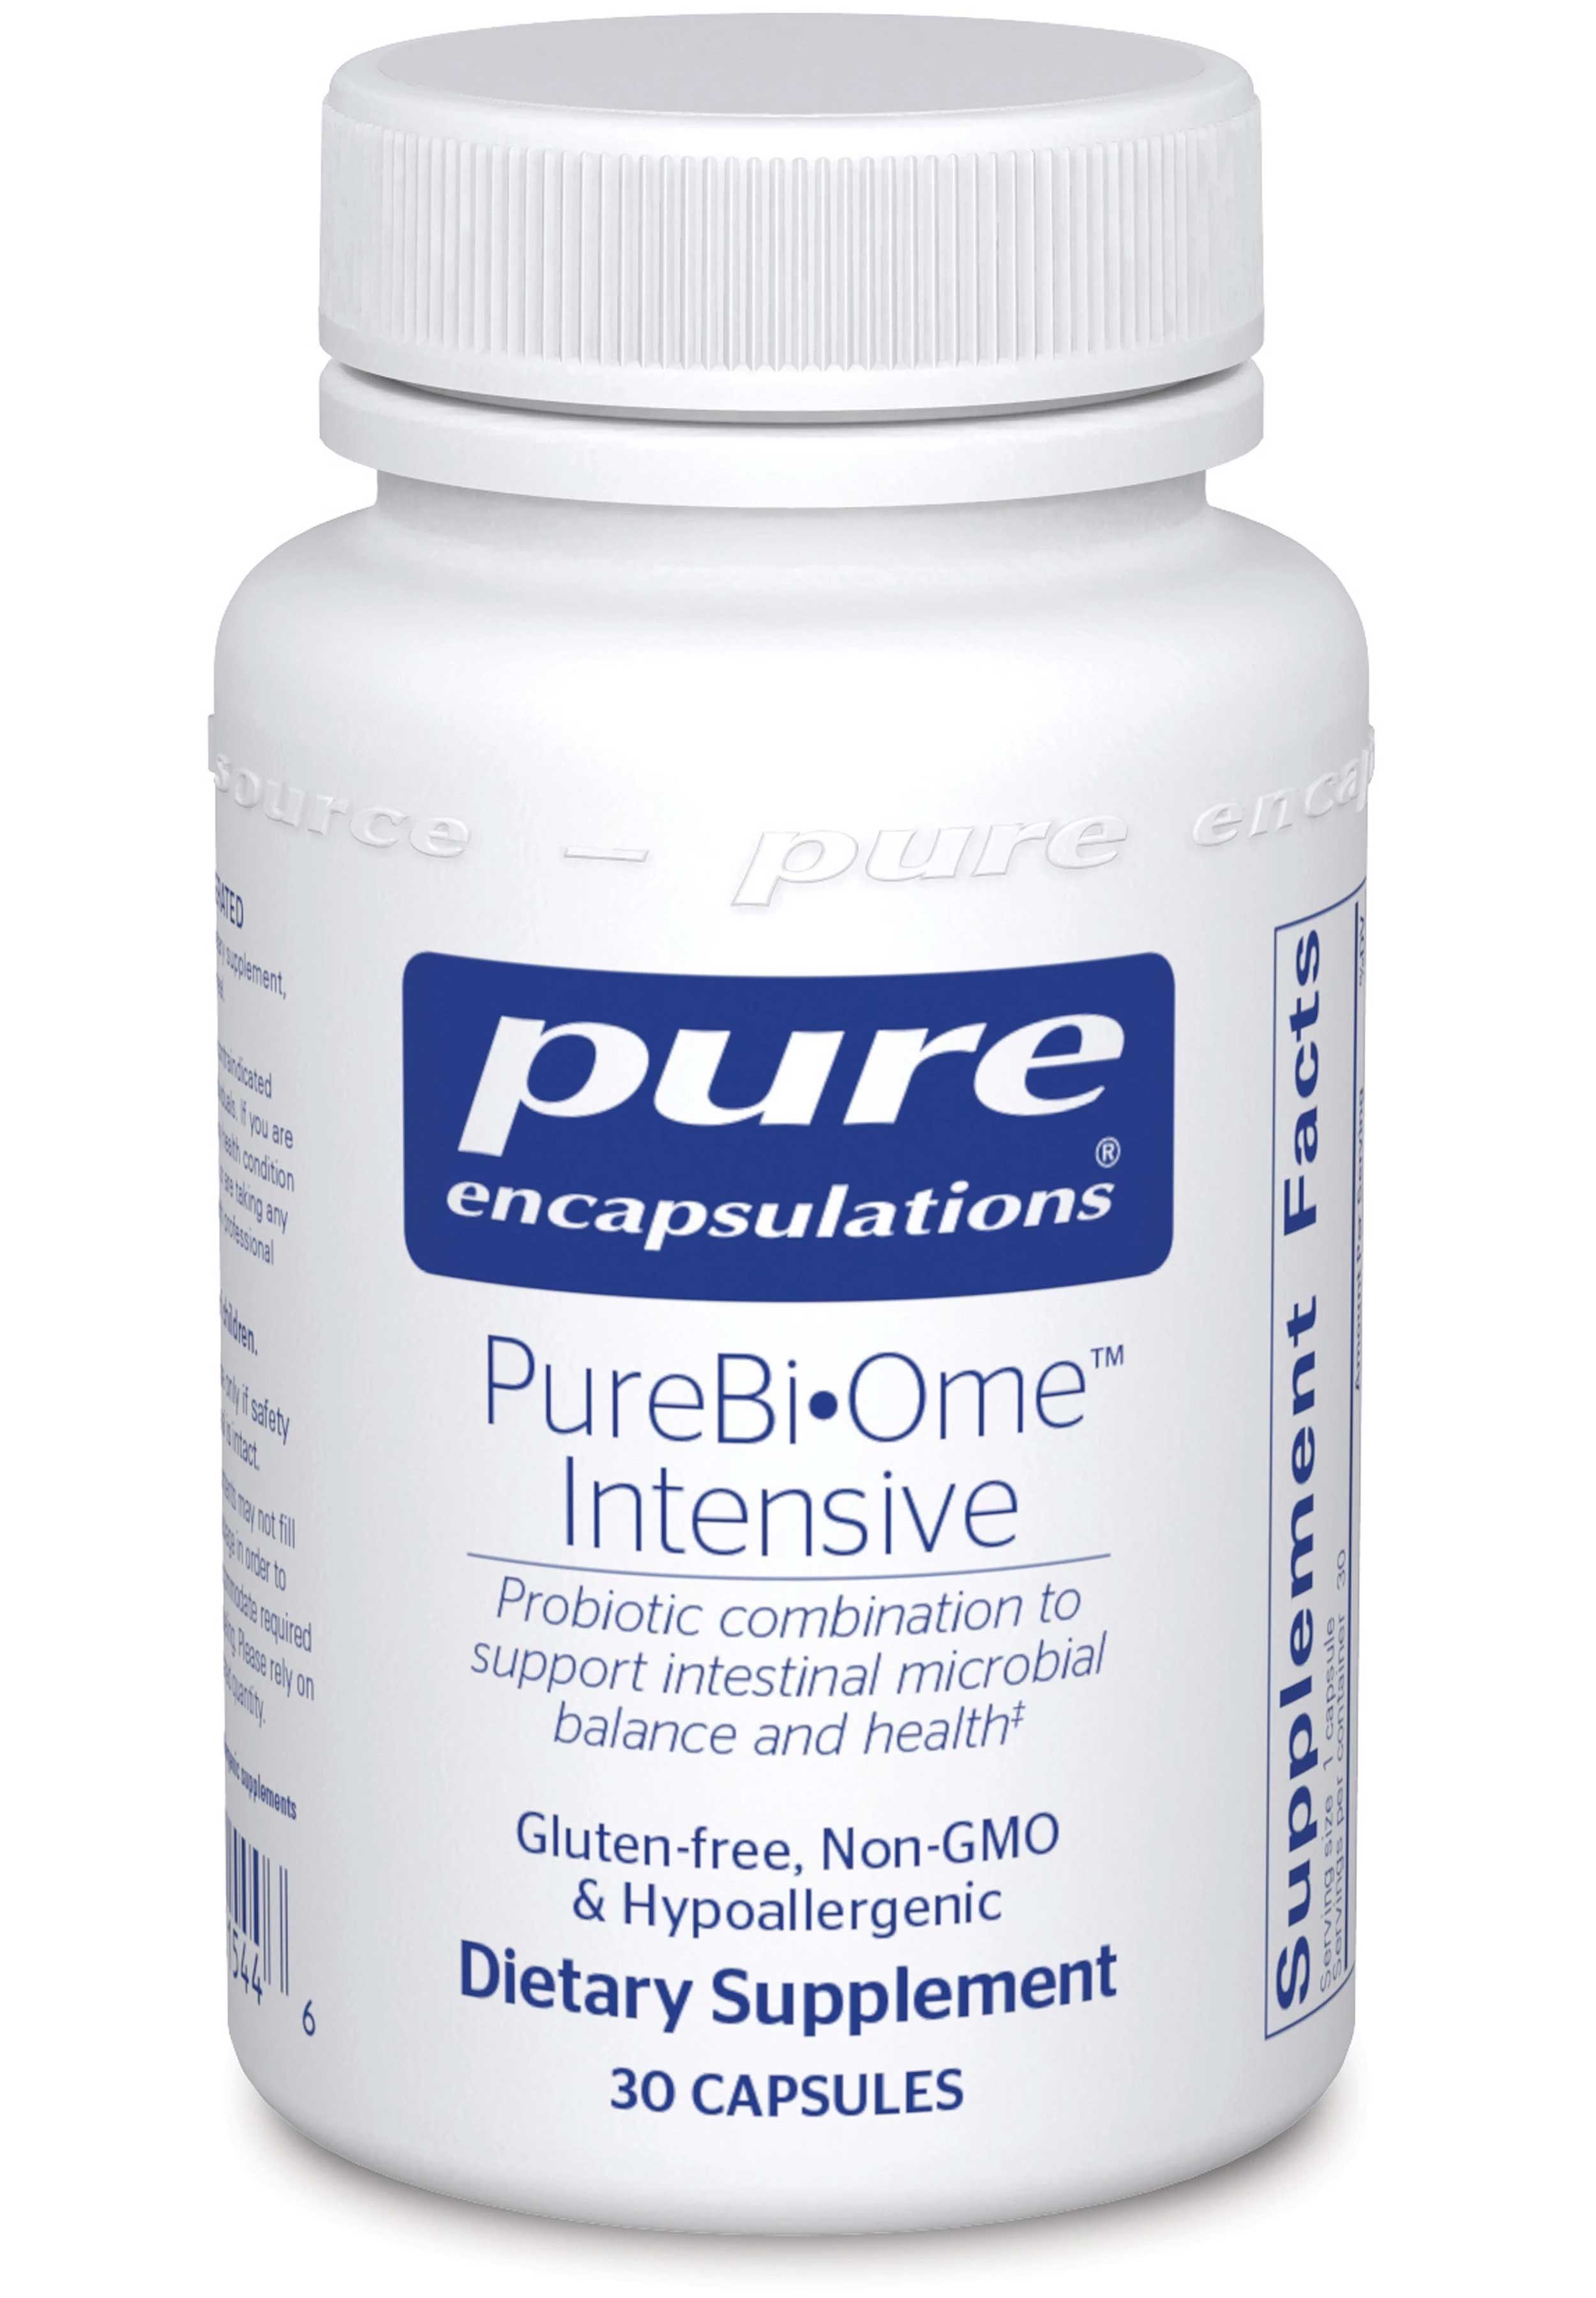 Pure Encapsulations PureBi•Ome Intensive